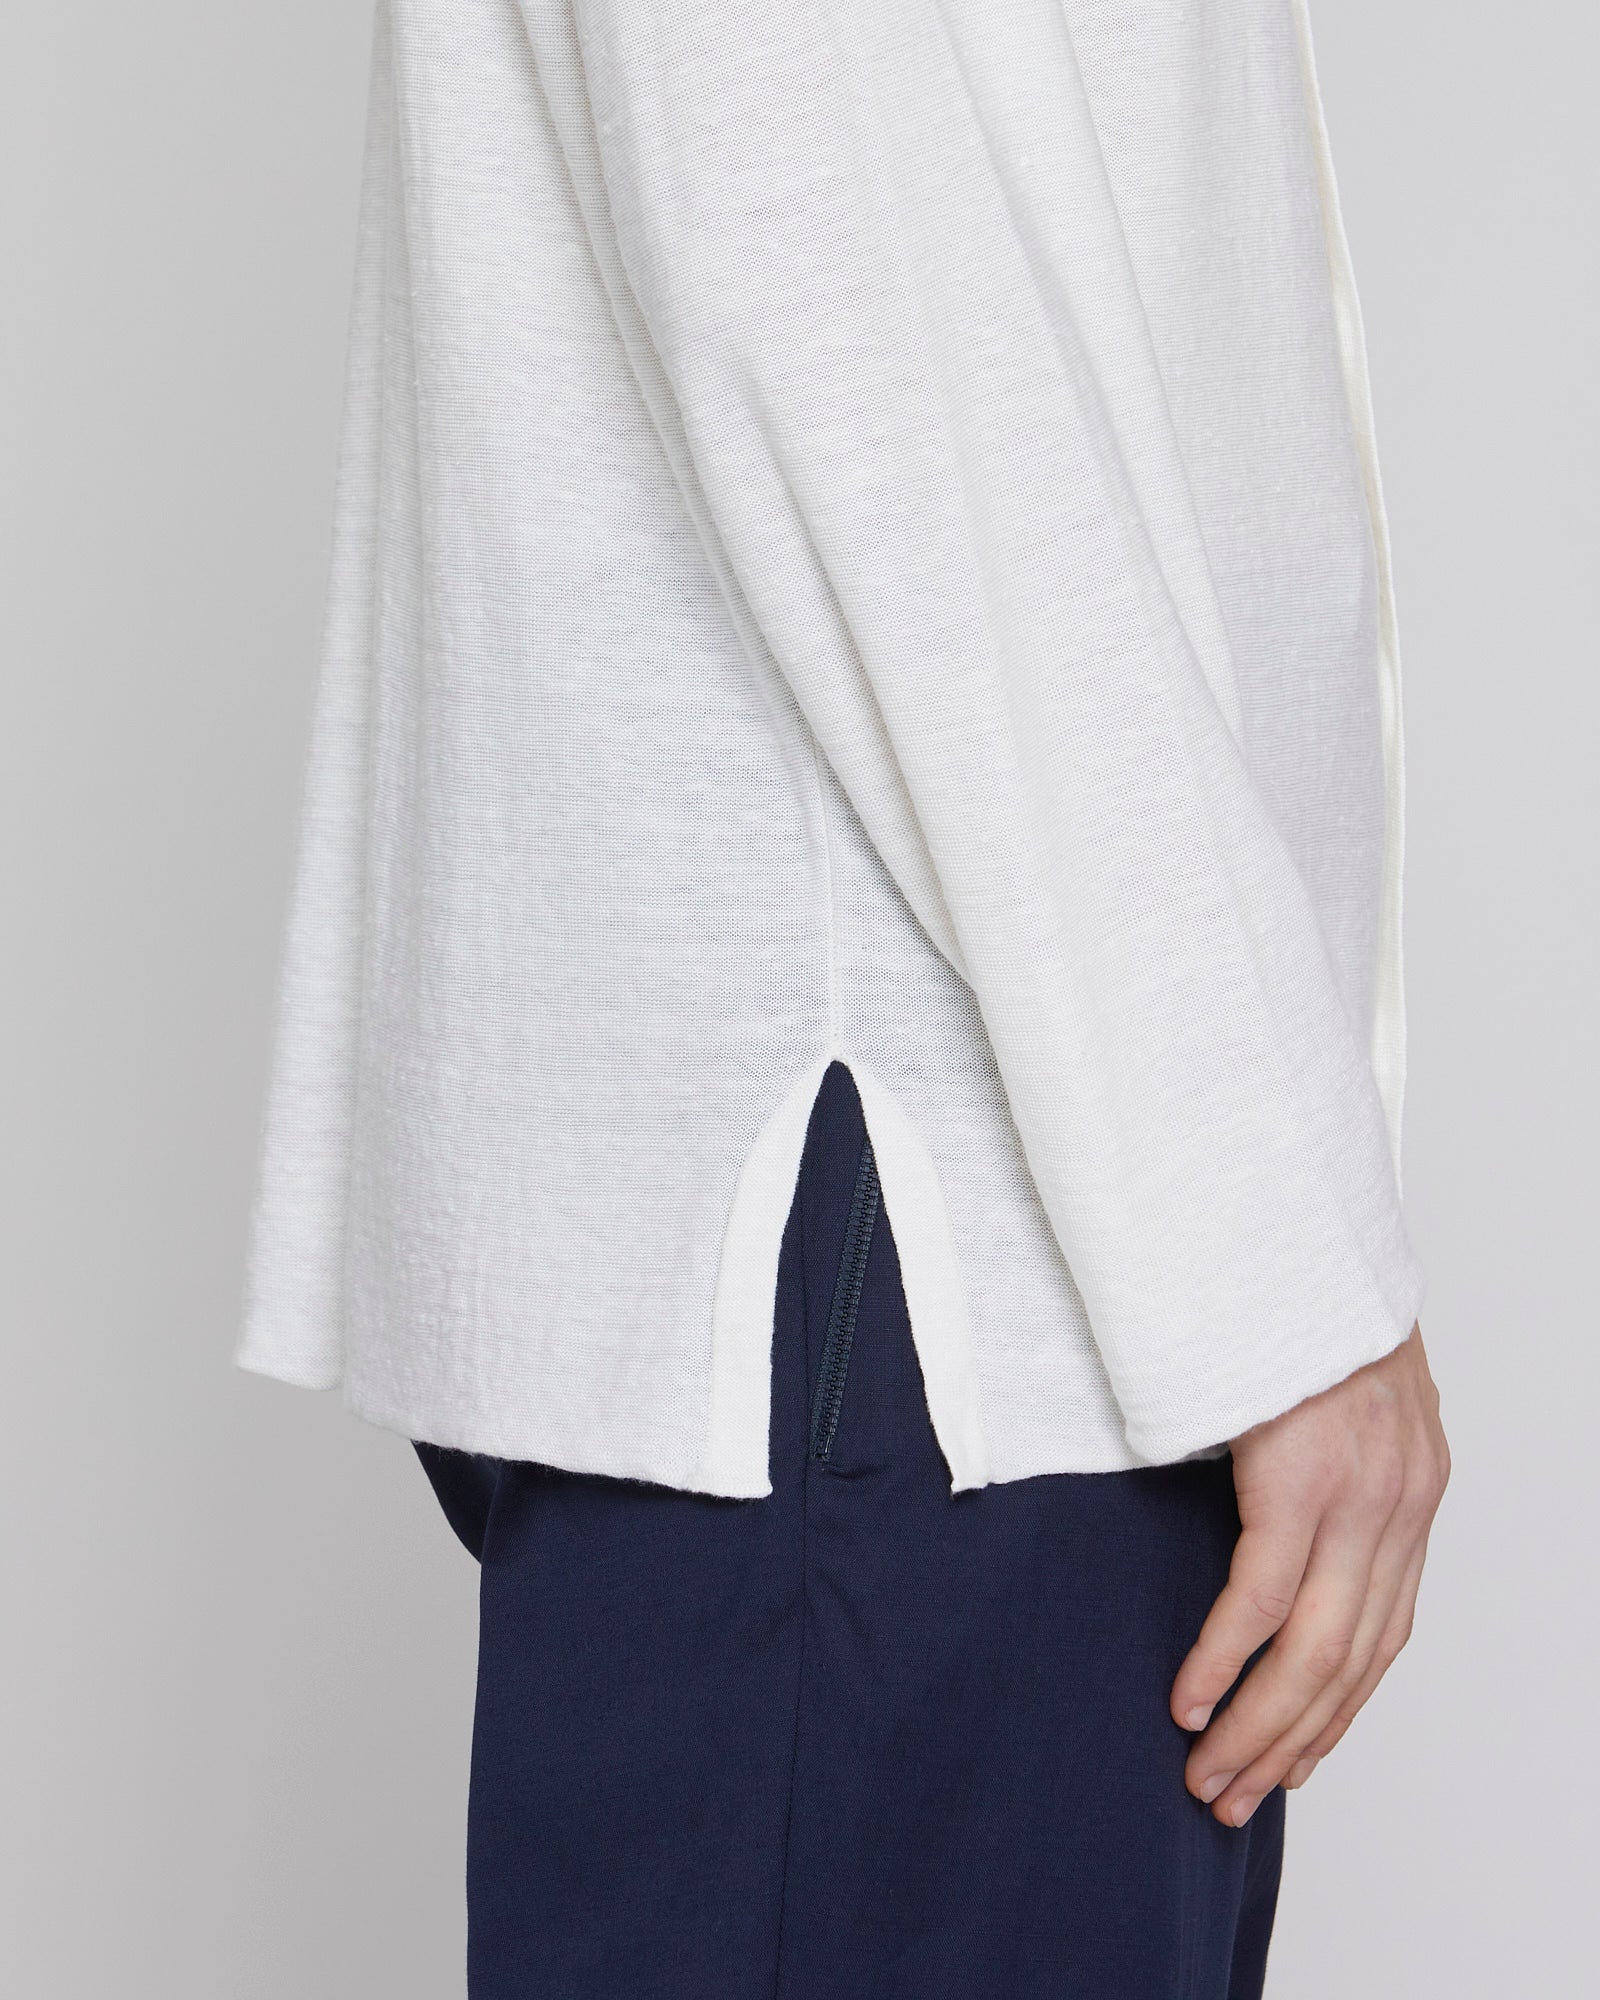 Linen, cashmere and silk covershirt